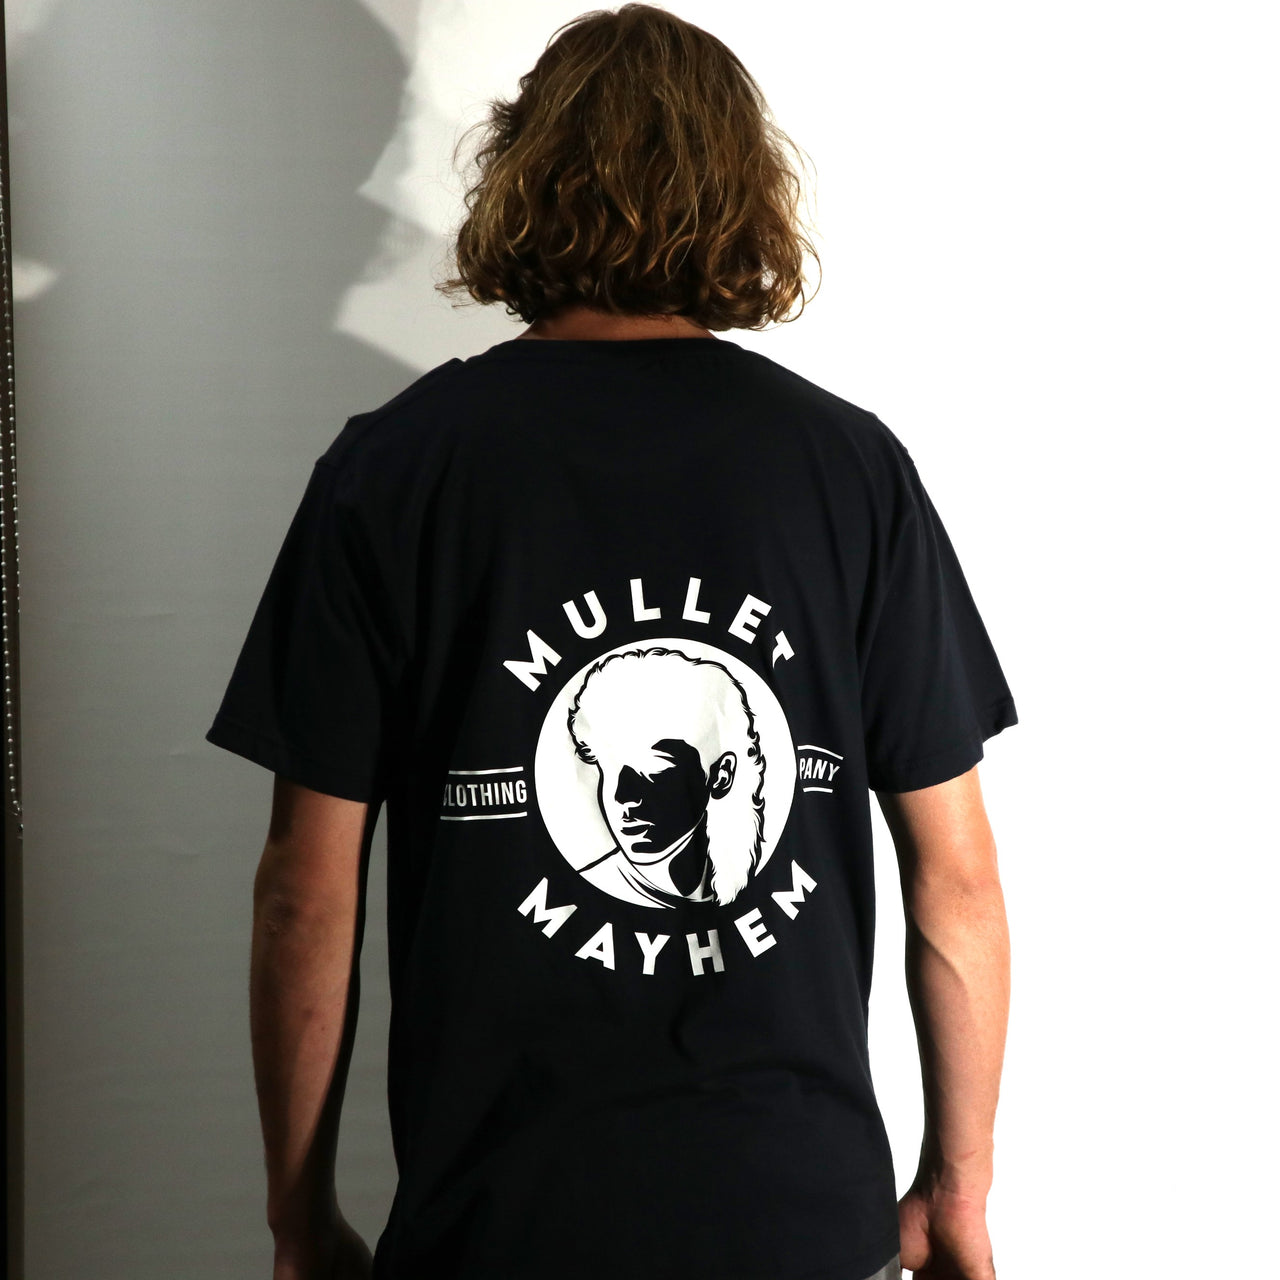 Mullet Mayhem Clothing Co (t-shirt)